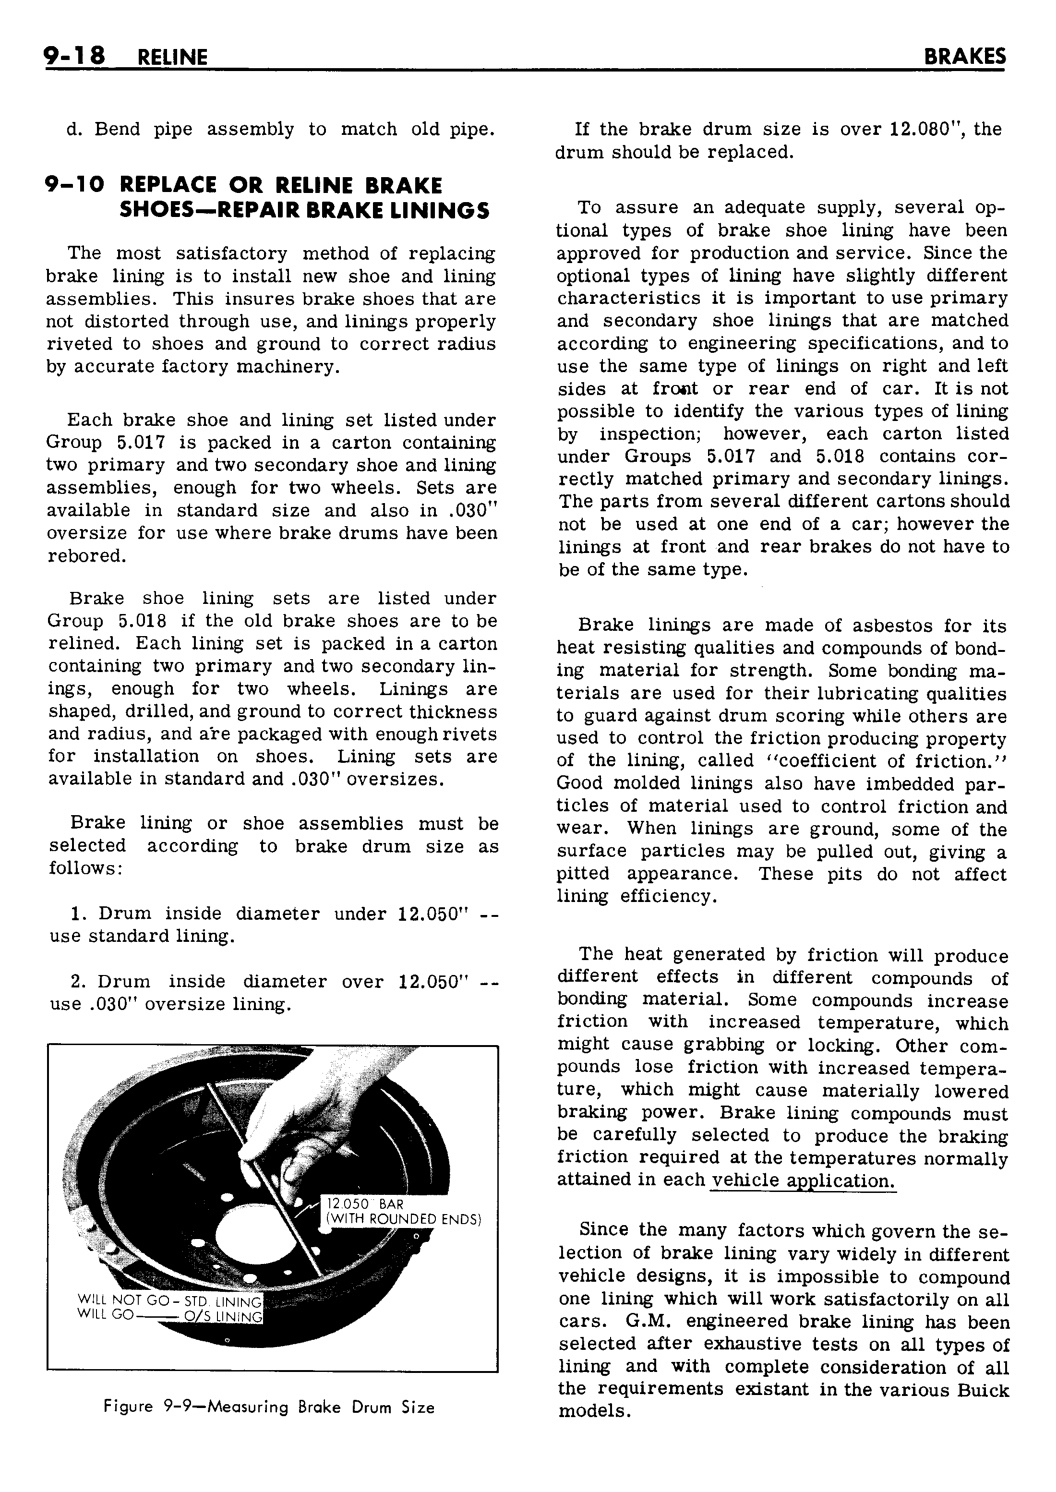 n_09 1961 Buick Shop Manual - Brakes-018-018.jpg